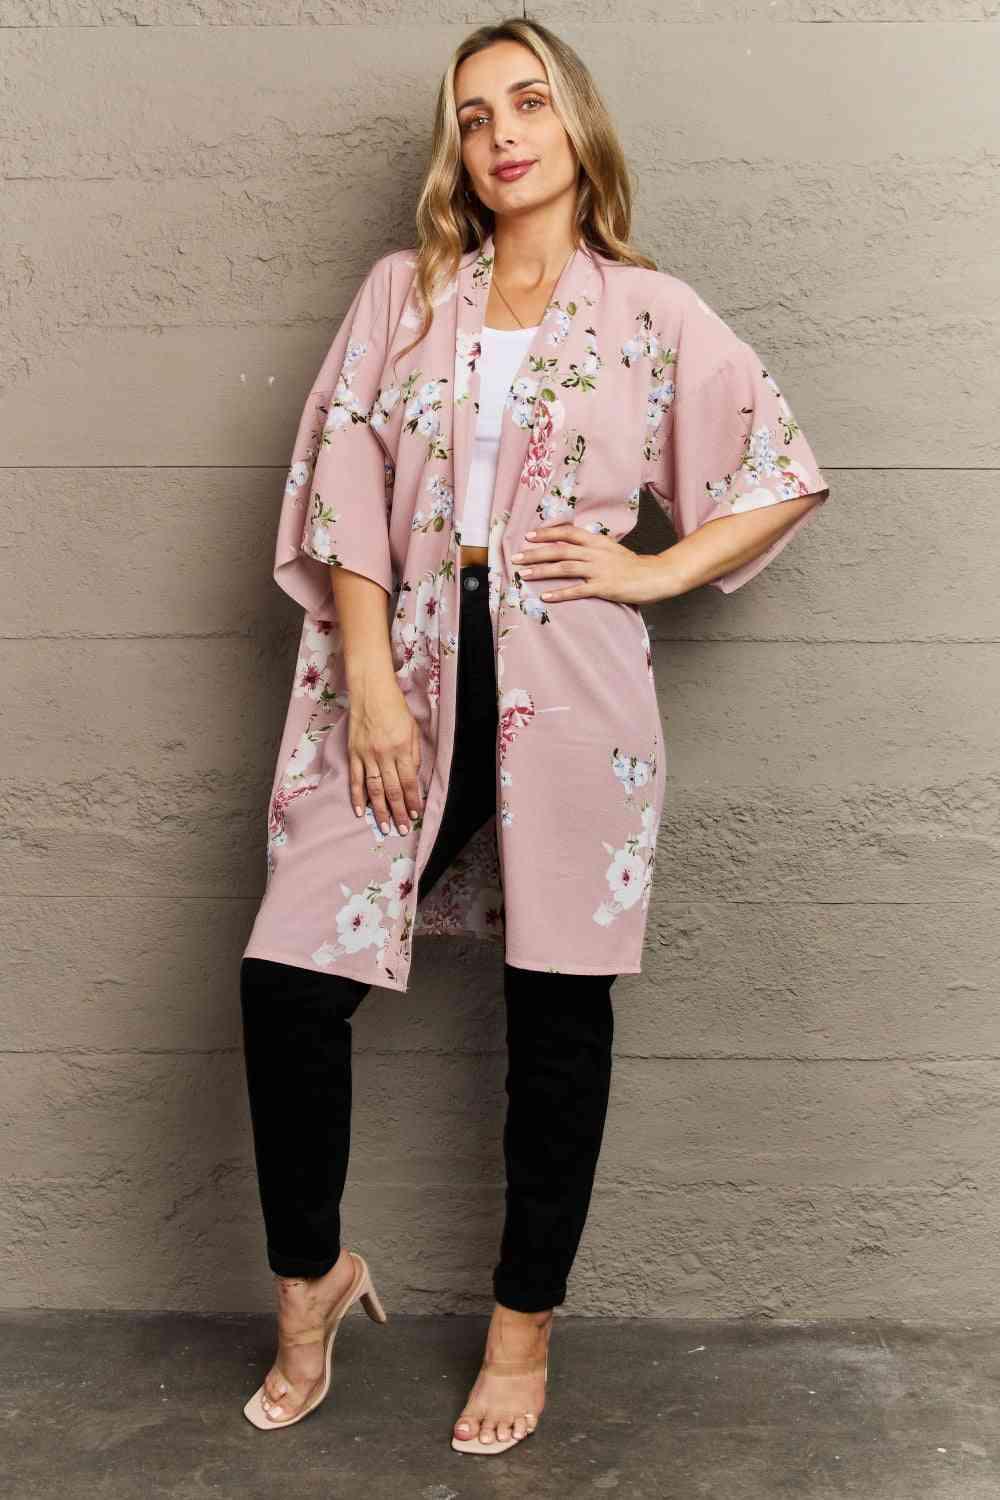 Justin Taylor Aurora Rose Floral Kimono - AMIClubwear